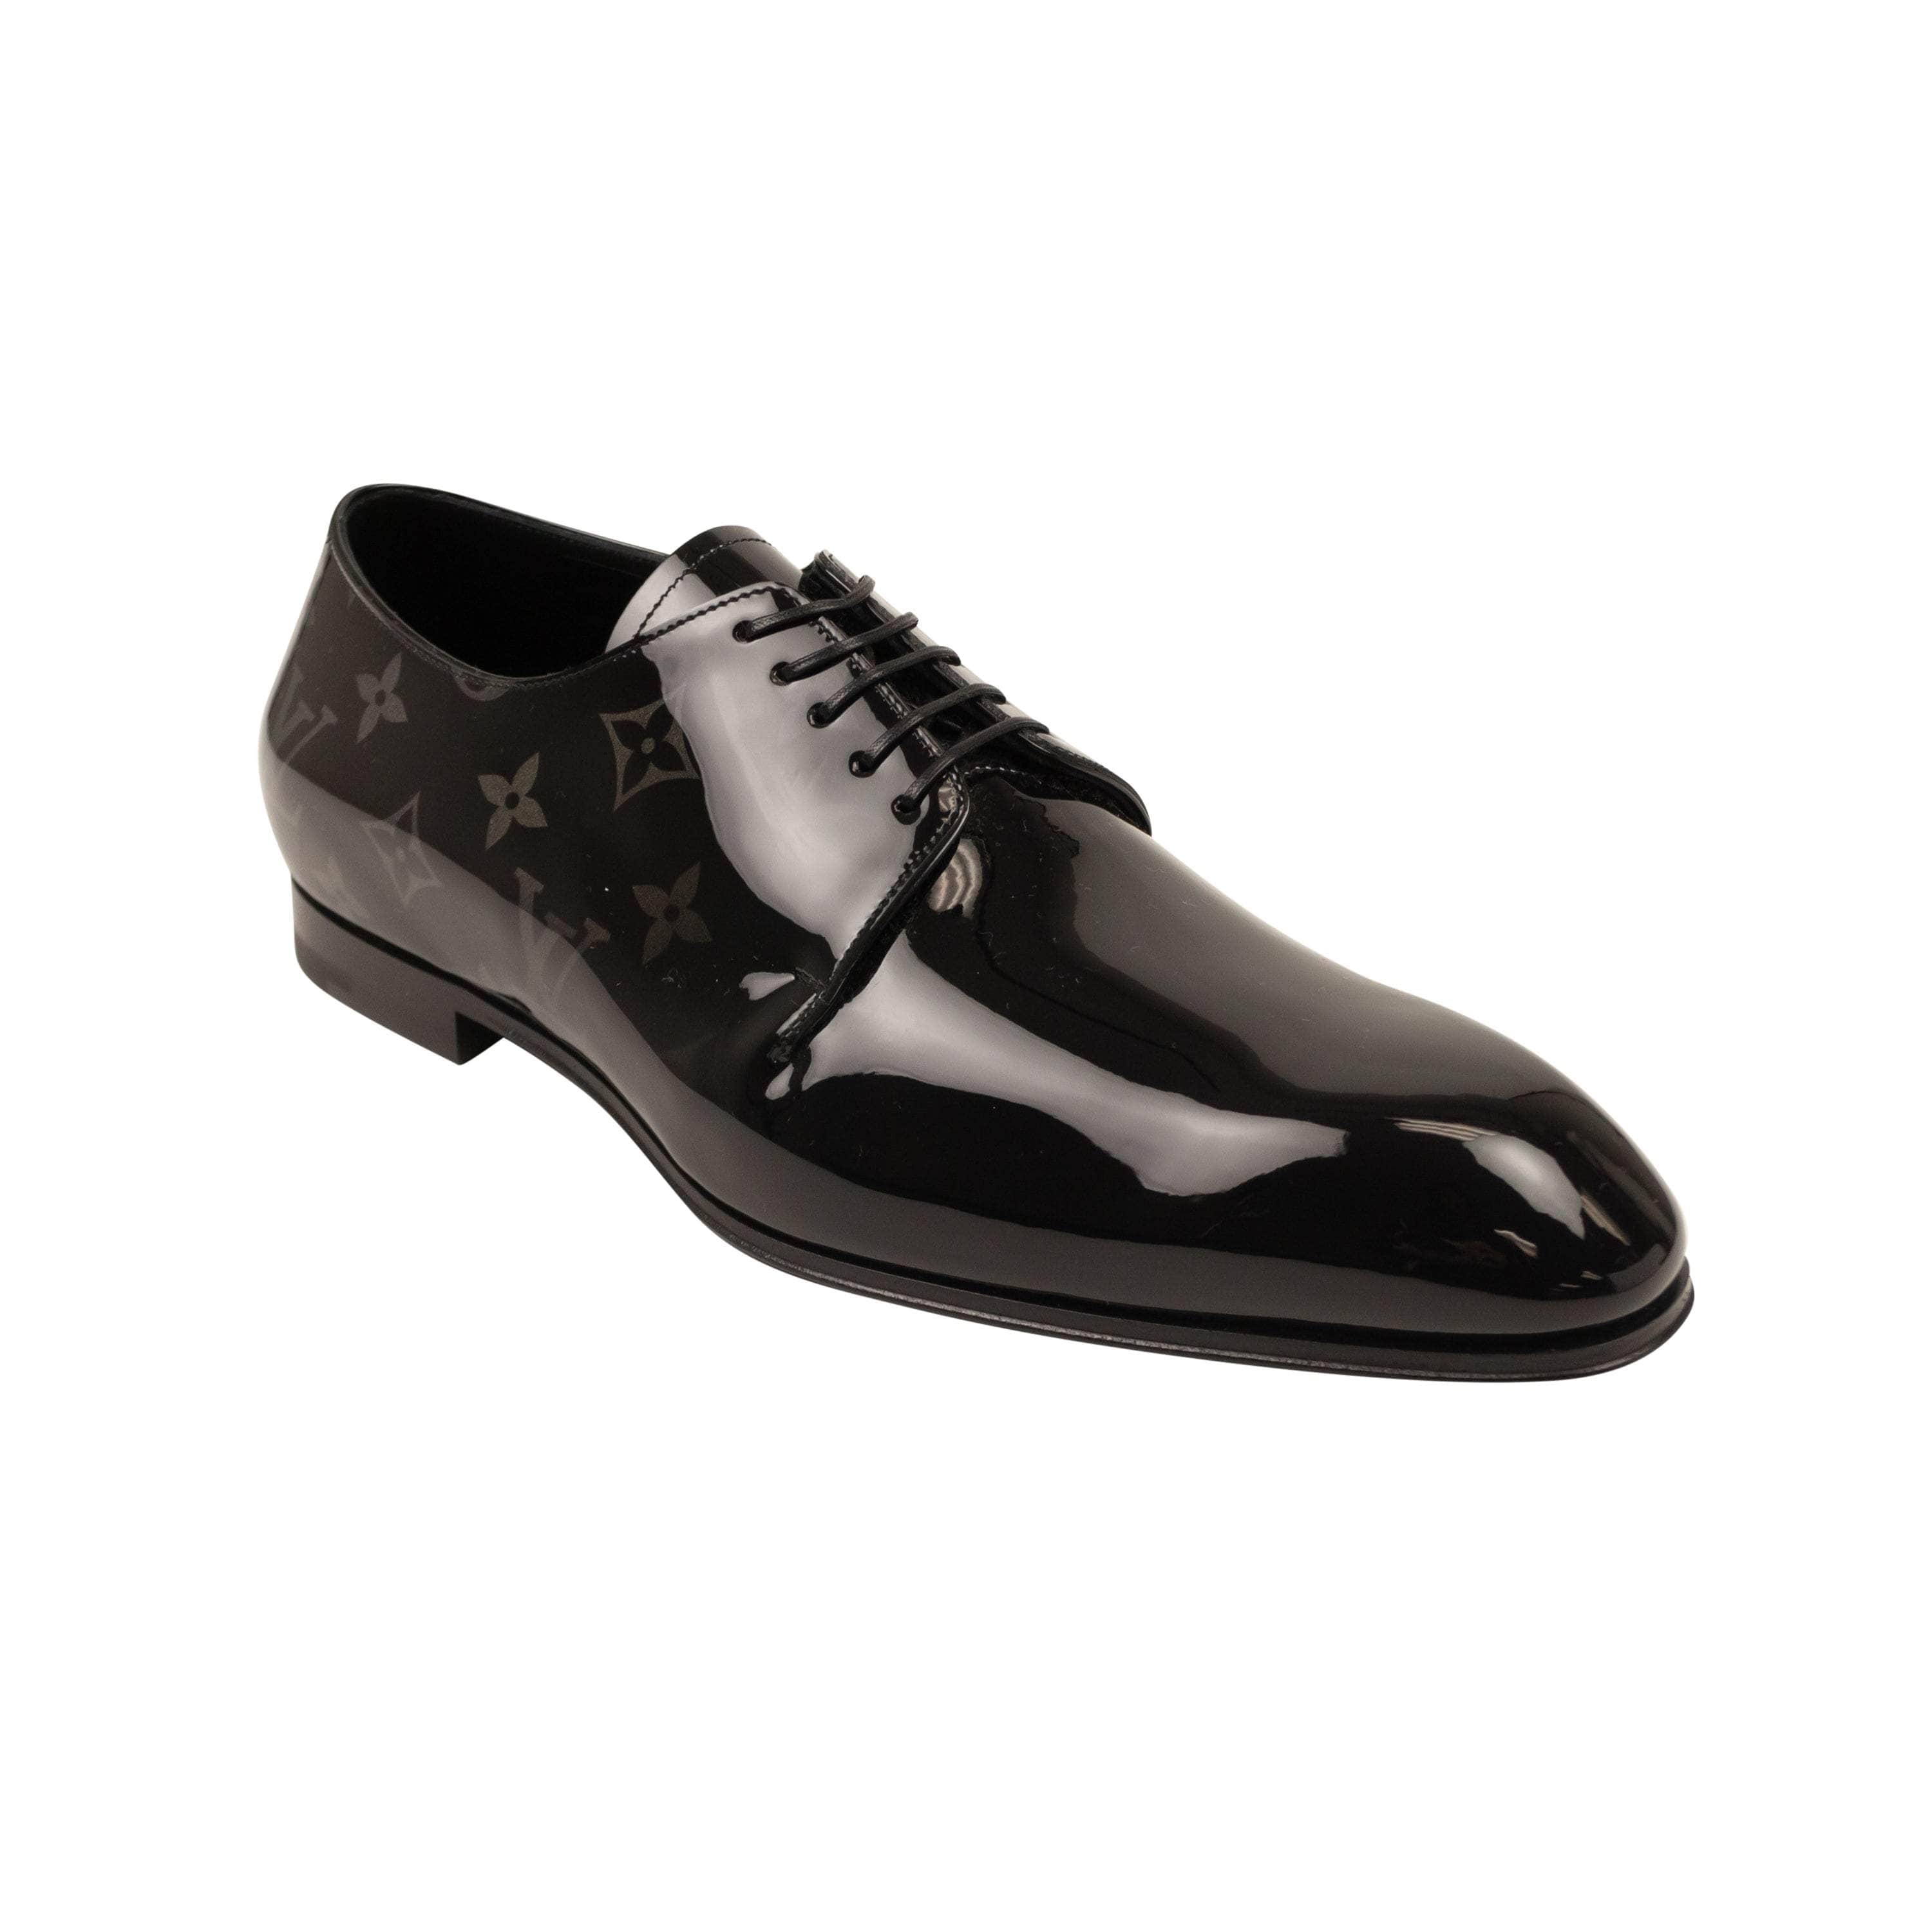 Louis Vuitton 500-750, channelenable-all, chicmi, couponcollection, gender-mens, main-shoes, mens-oxfords-derby-shoes, mens-shoes, size-5, SPO, stadiumgoods 5 / MT0241 Black Monogram Patent Leather Oxford Dress Shoes 95-LVT-2105/5 95-LVT-2105/5